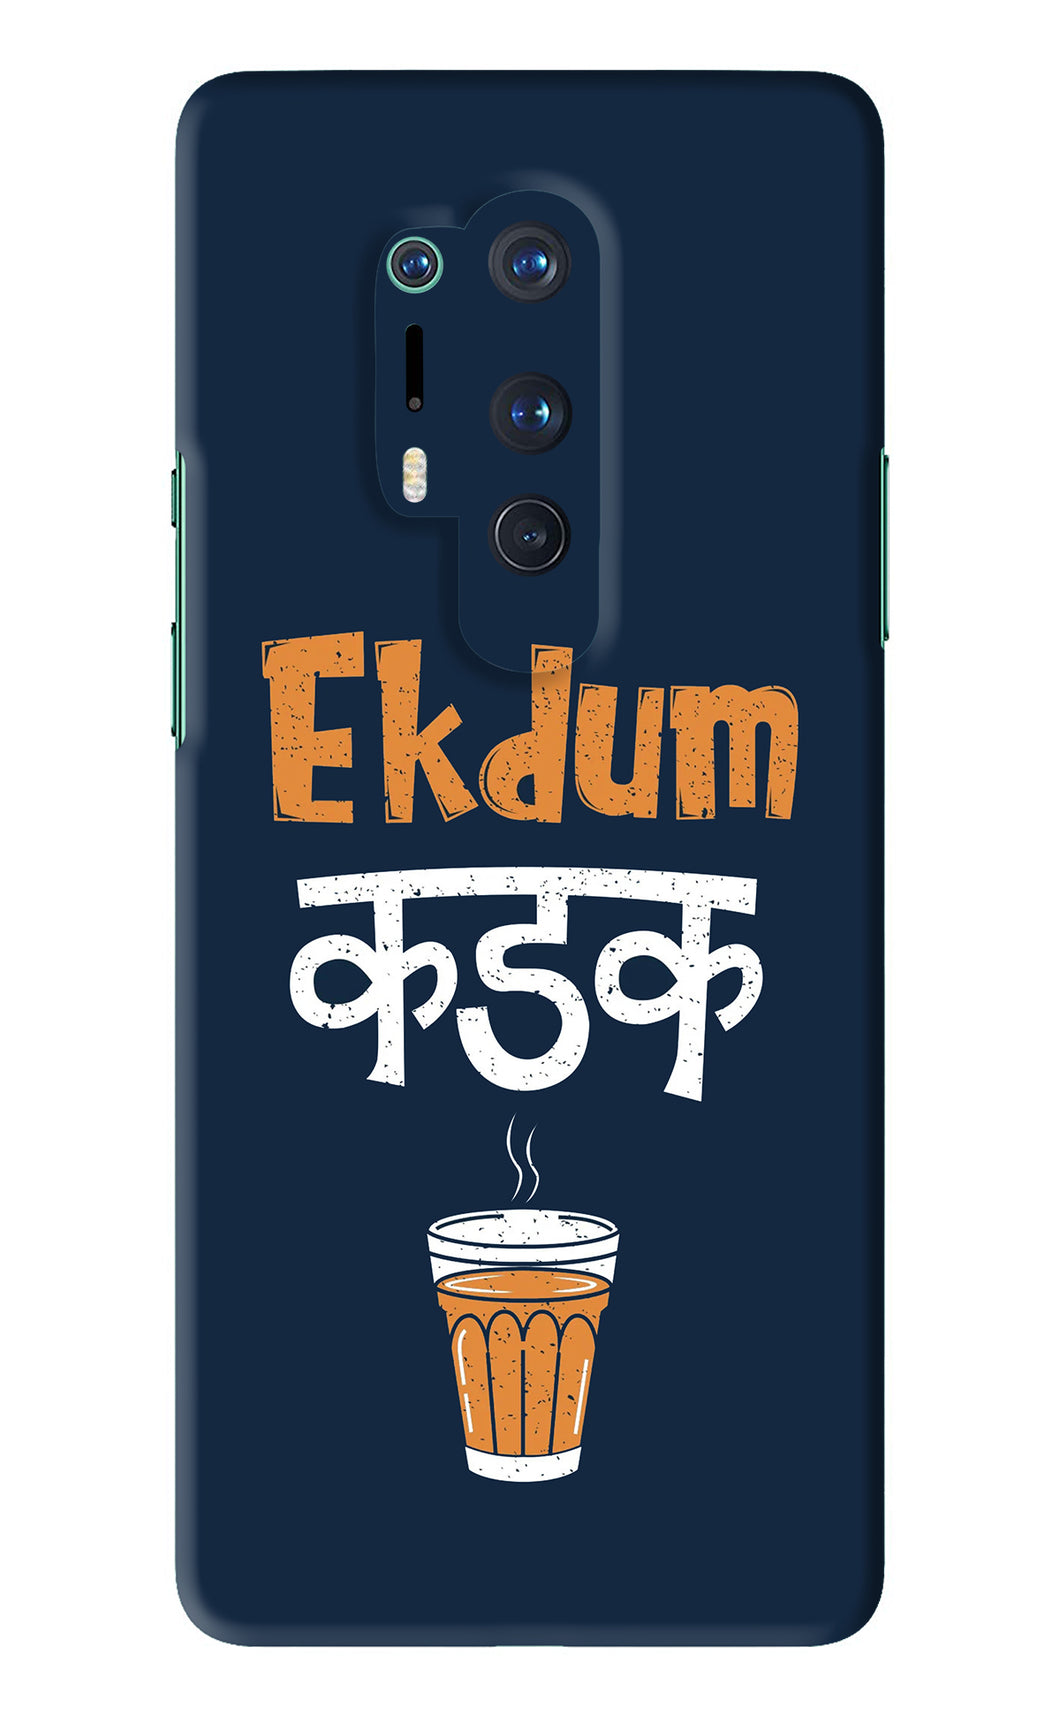 Ekdum Kadak Chai OnePlus 8 Pro Back Skin Wrap